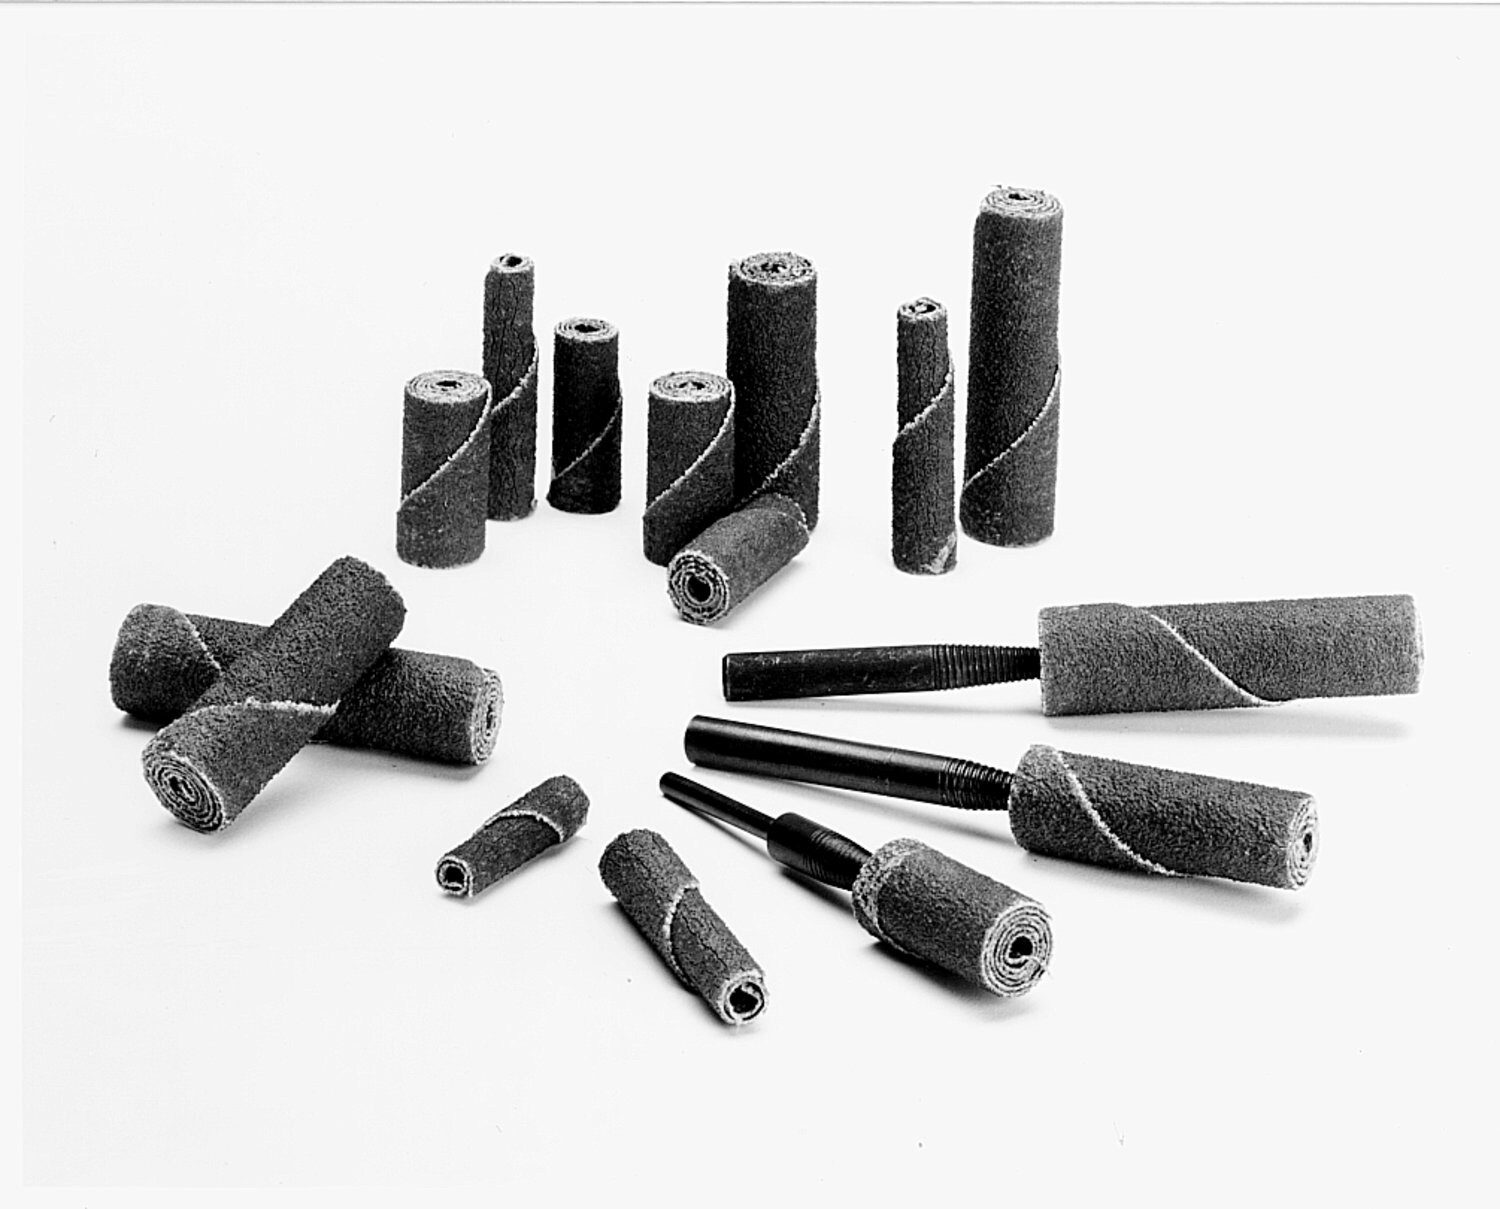 7010368479 - Standard Abrasives Ceramic Cartridge Roll, 730077, CR-ST, 80, 1/4 in x
1-1/2 in x 1/8 in, Straight, 100 ea/Case